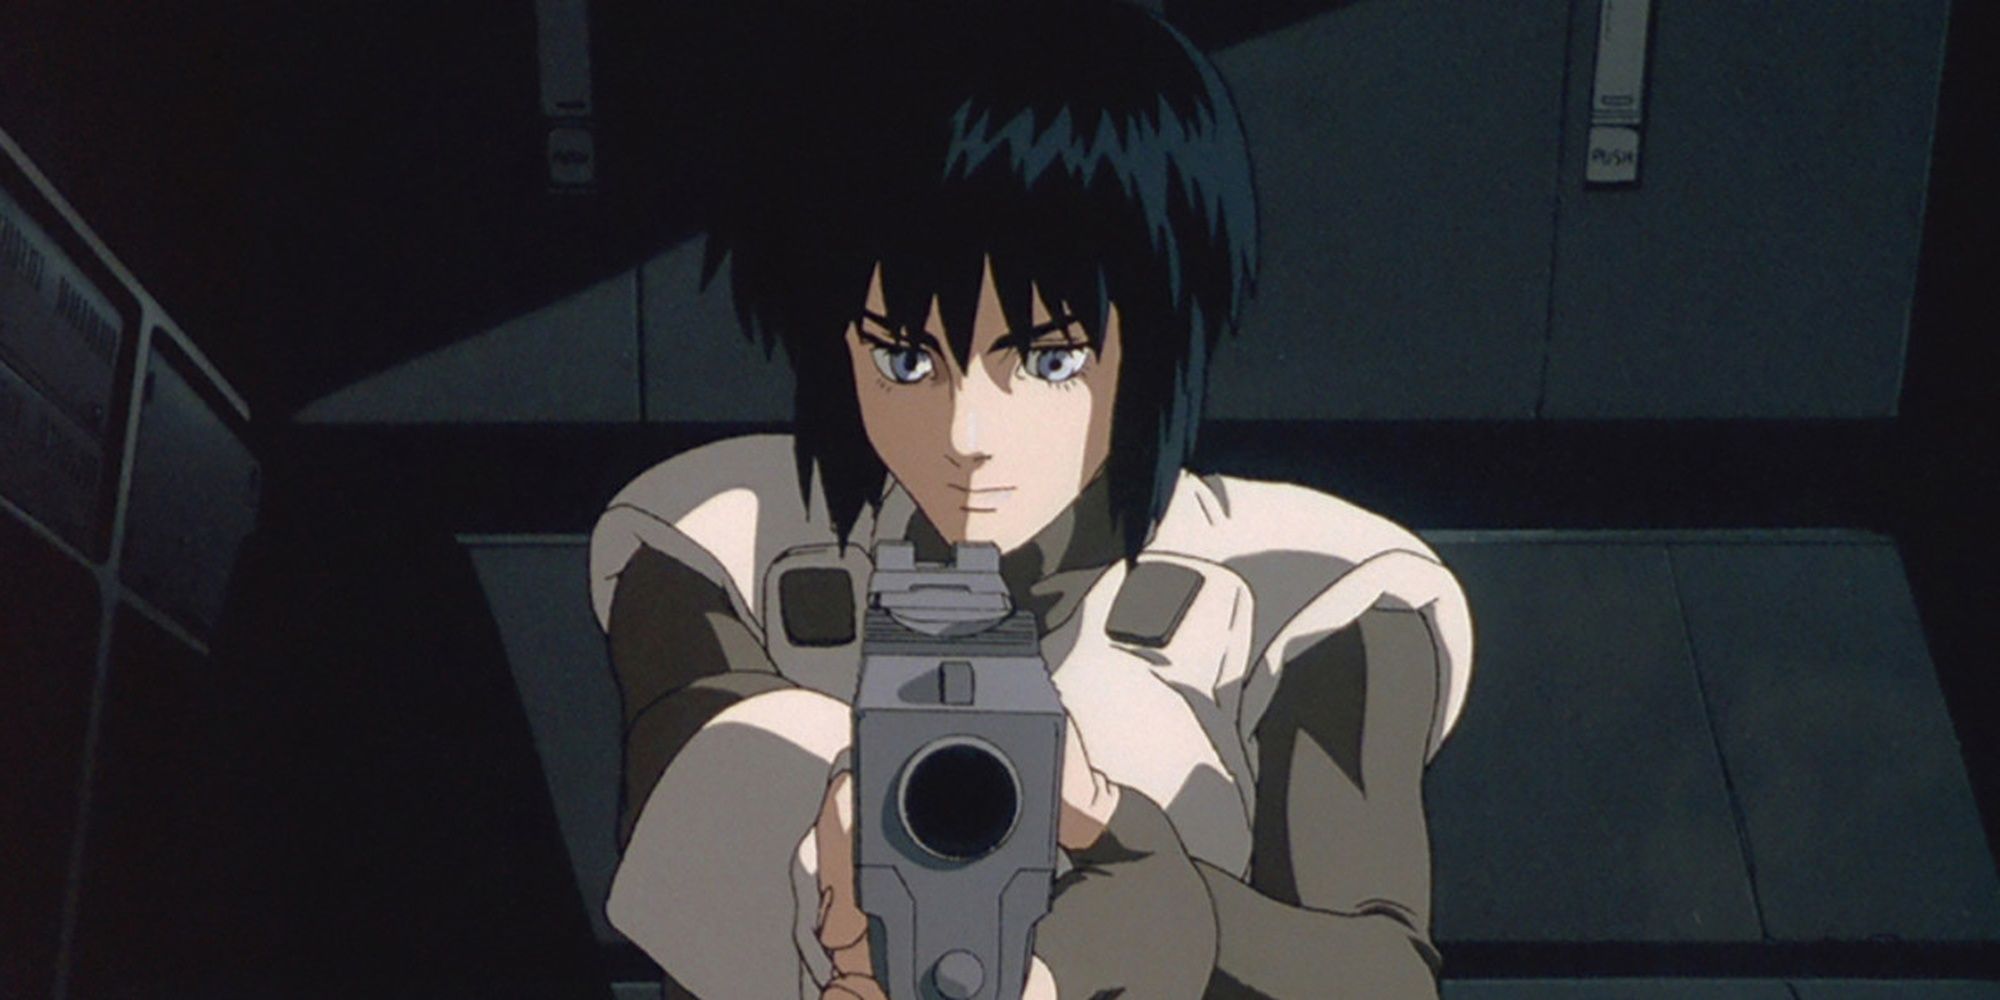 Motoko Kusanagi the main cyborg protagonist Ghost In The Shell Anime Movie